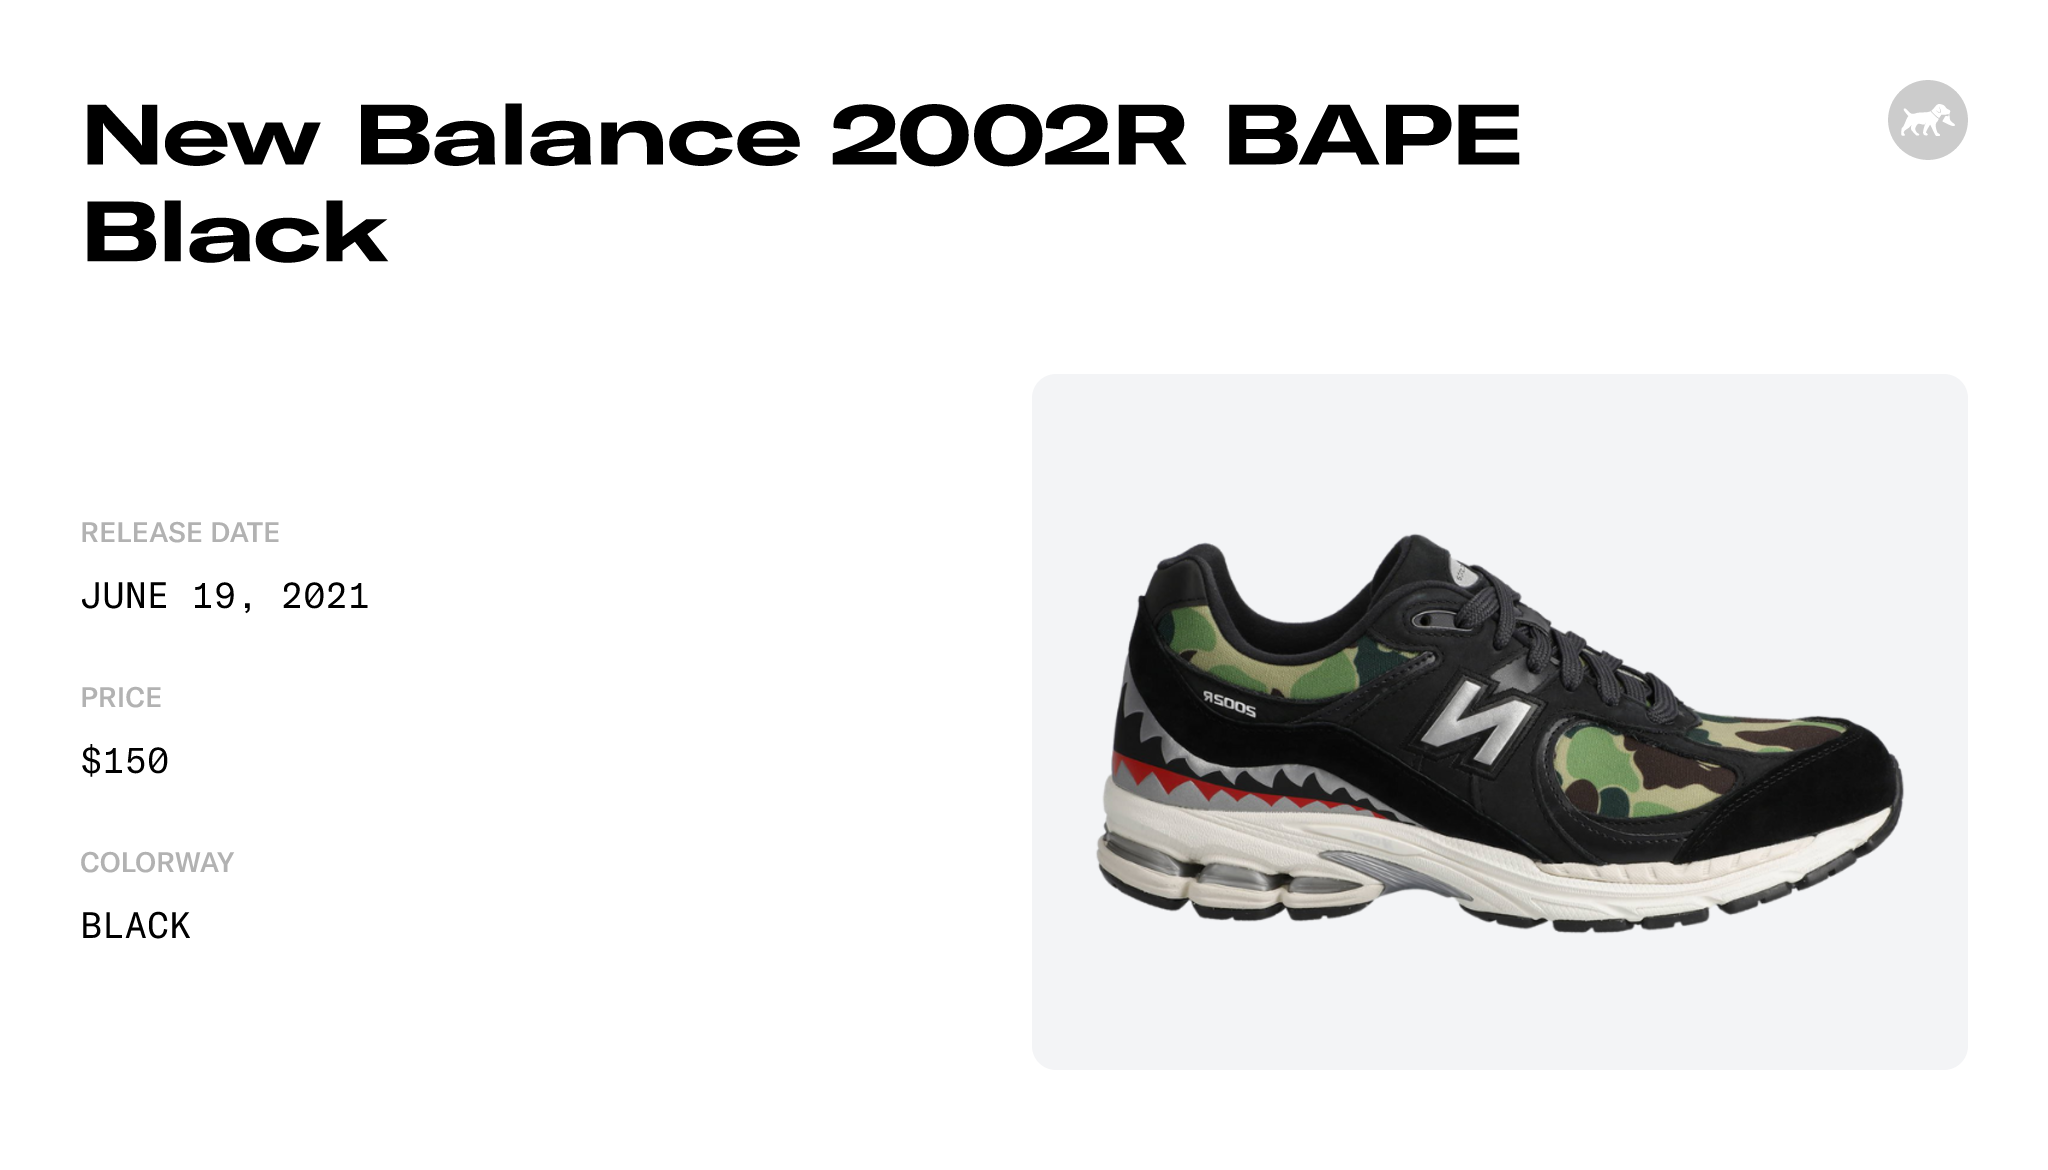 New Balance 2002R BAPE Black - NB2002RB Raffles and Release Date